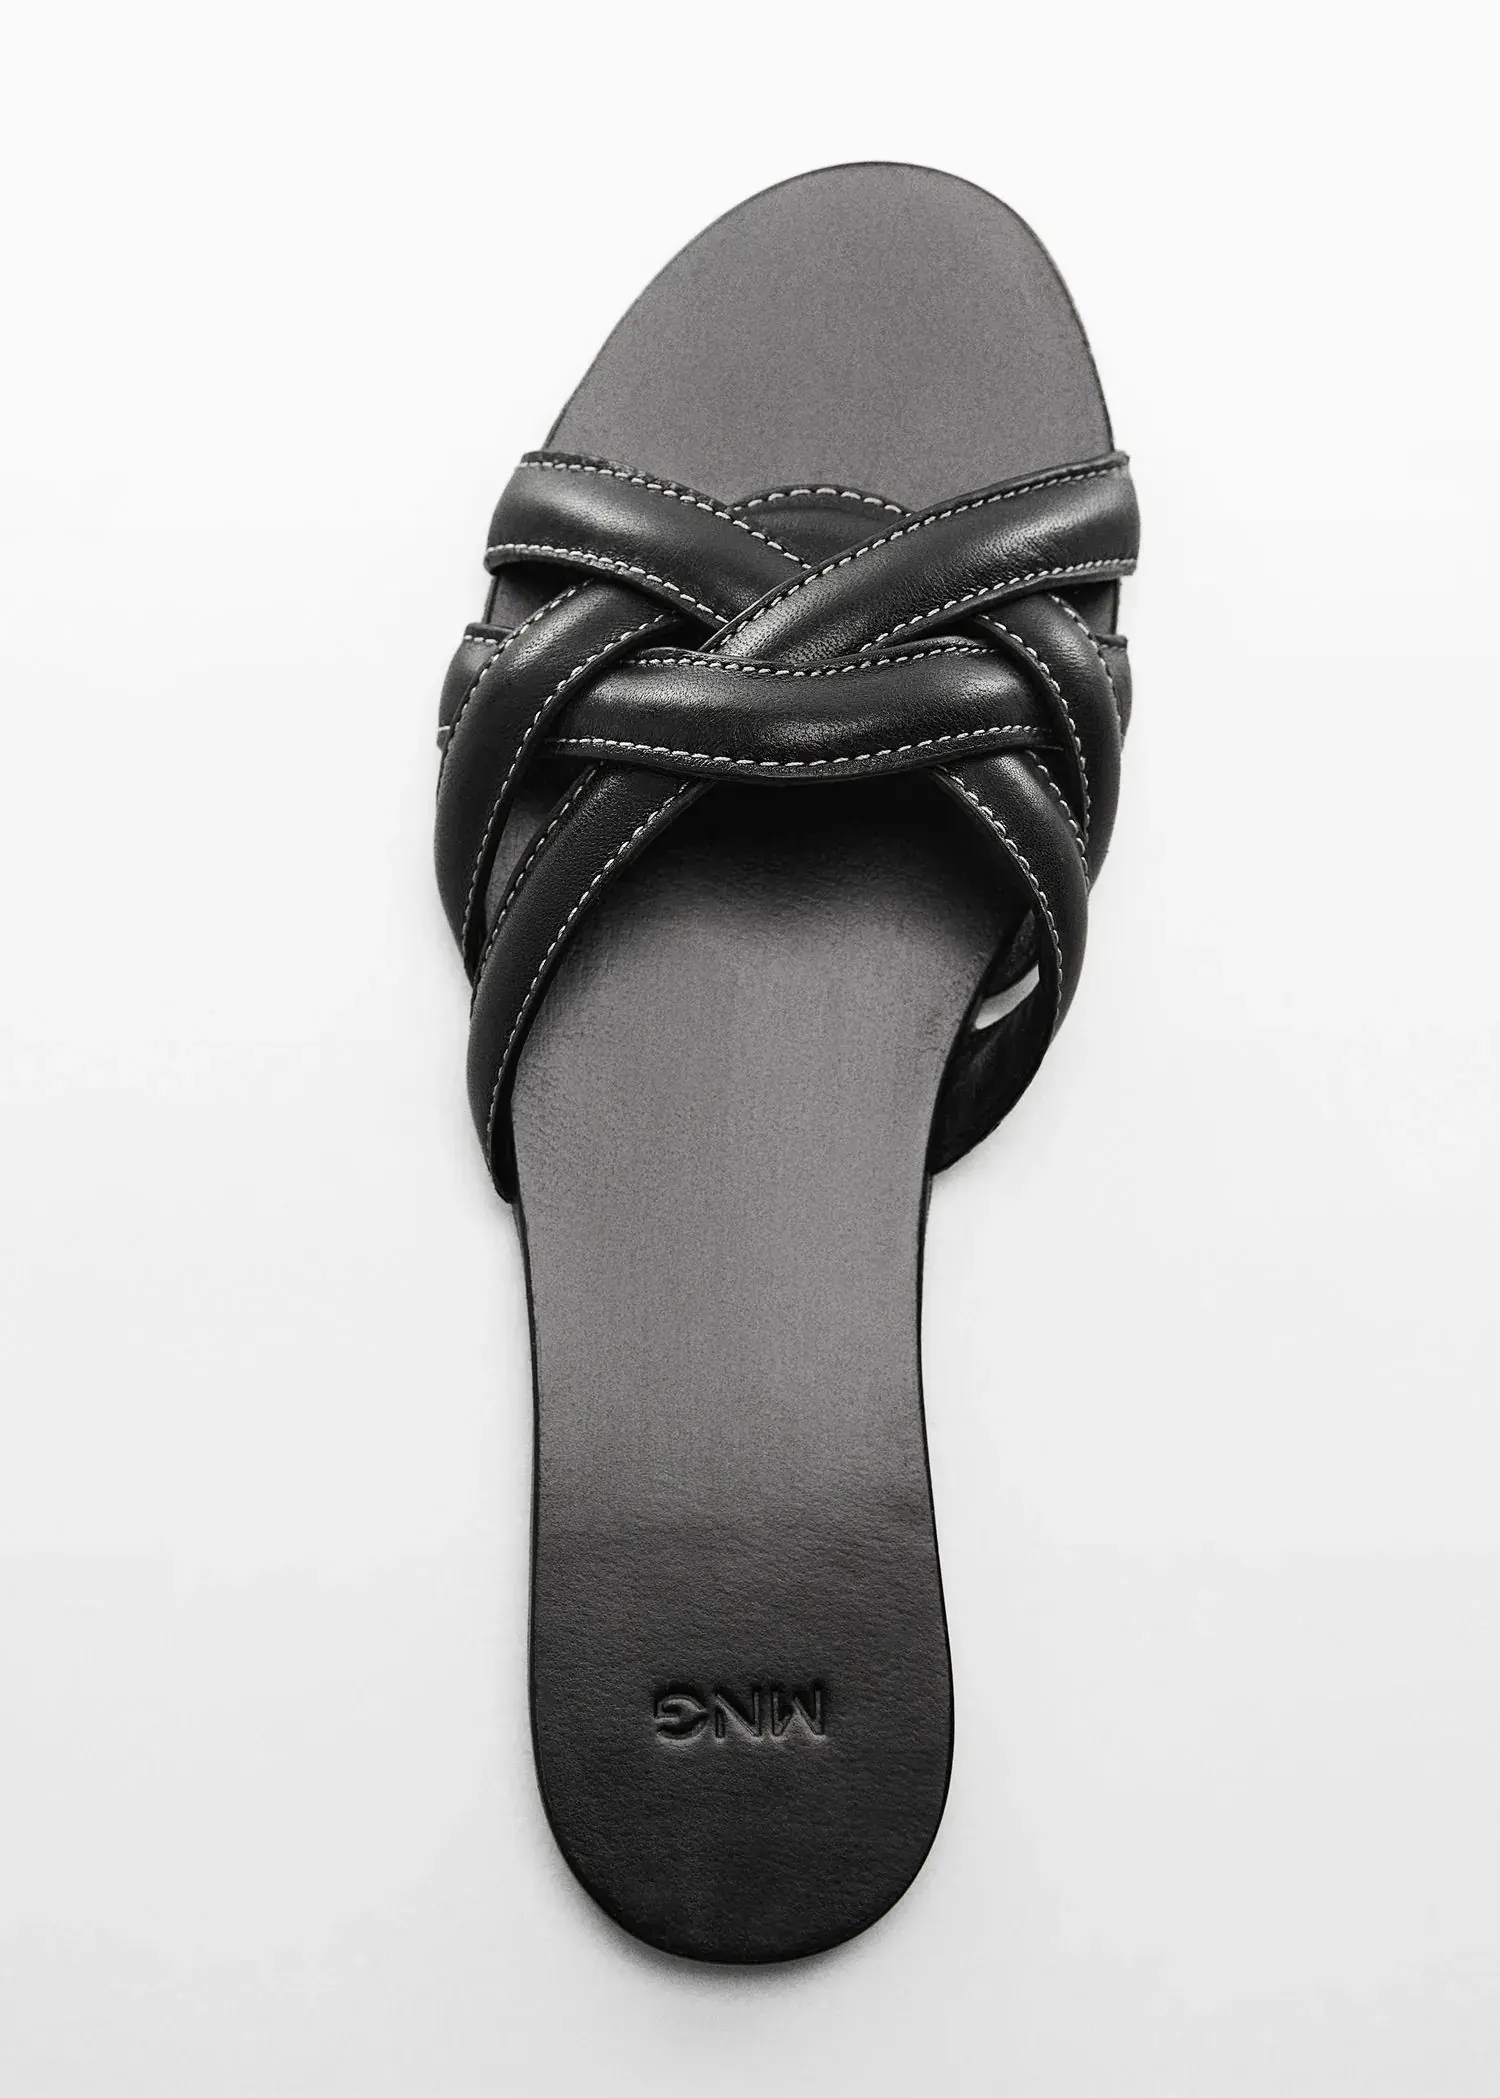 Mango Leather straps sandals. 1